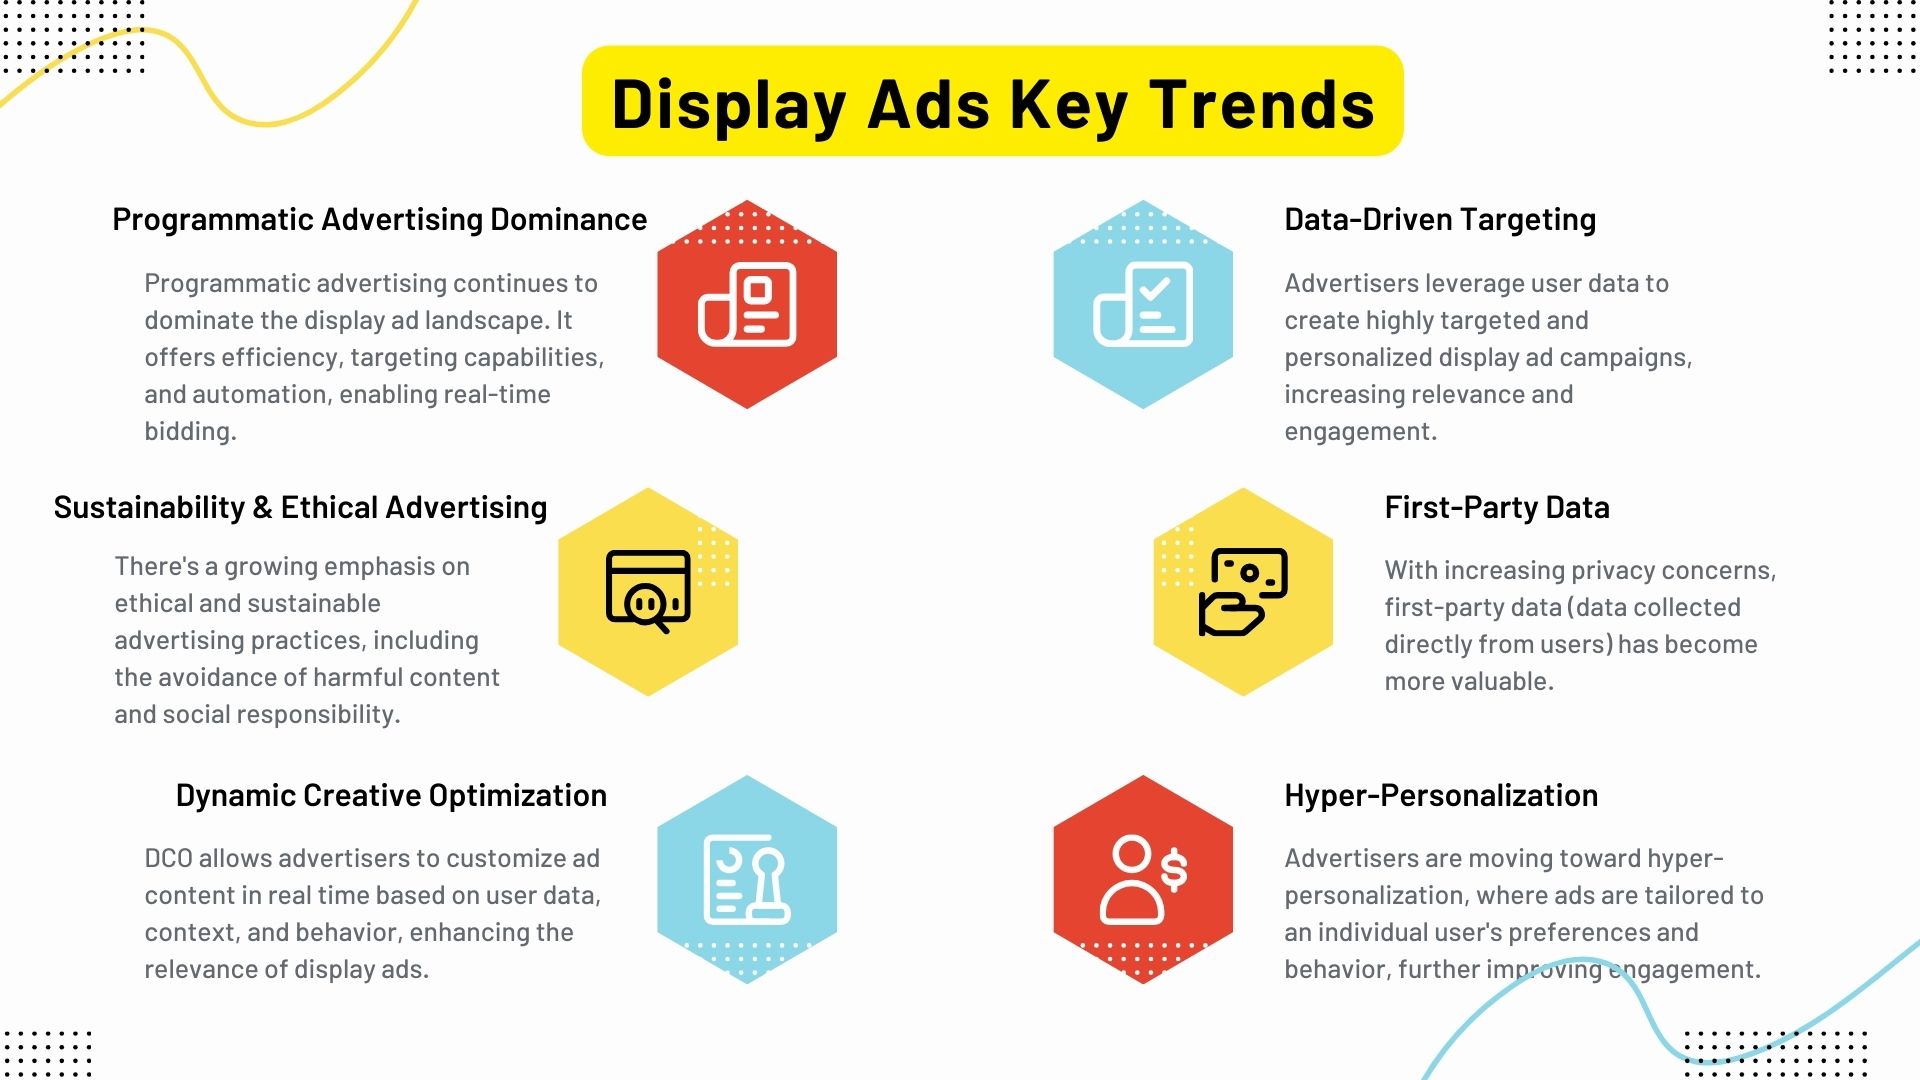 Display ads key trends